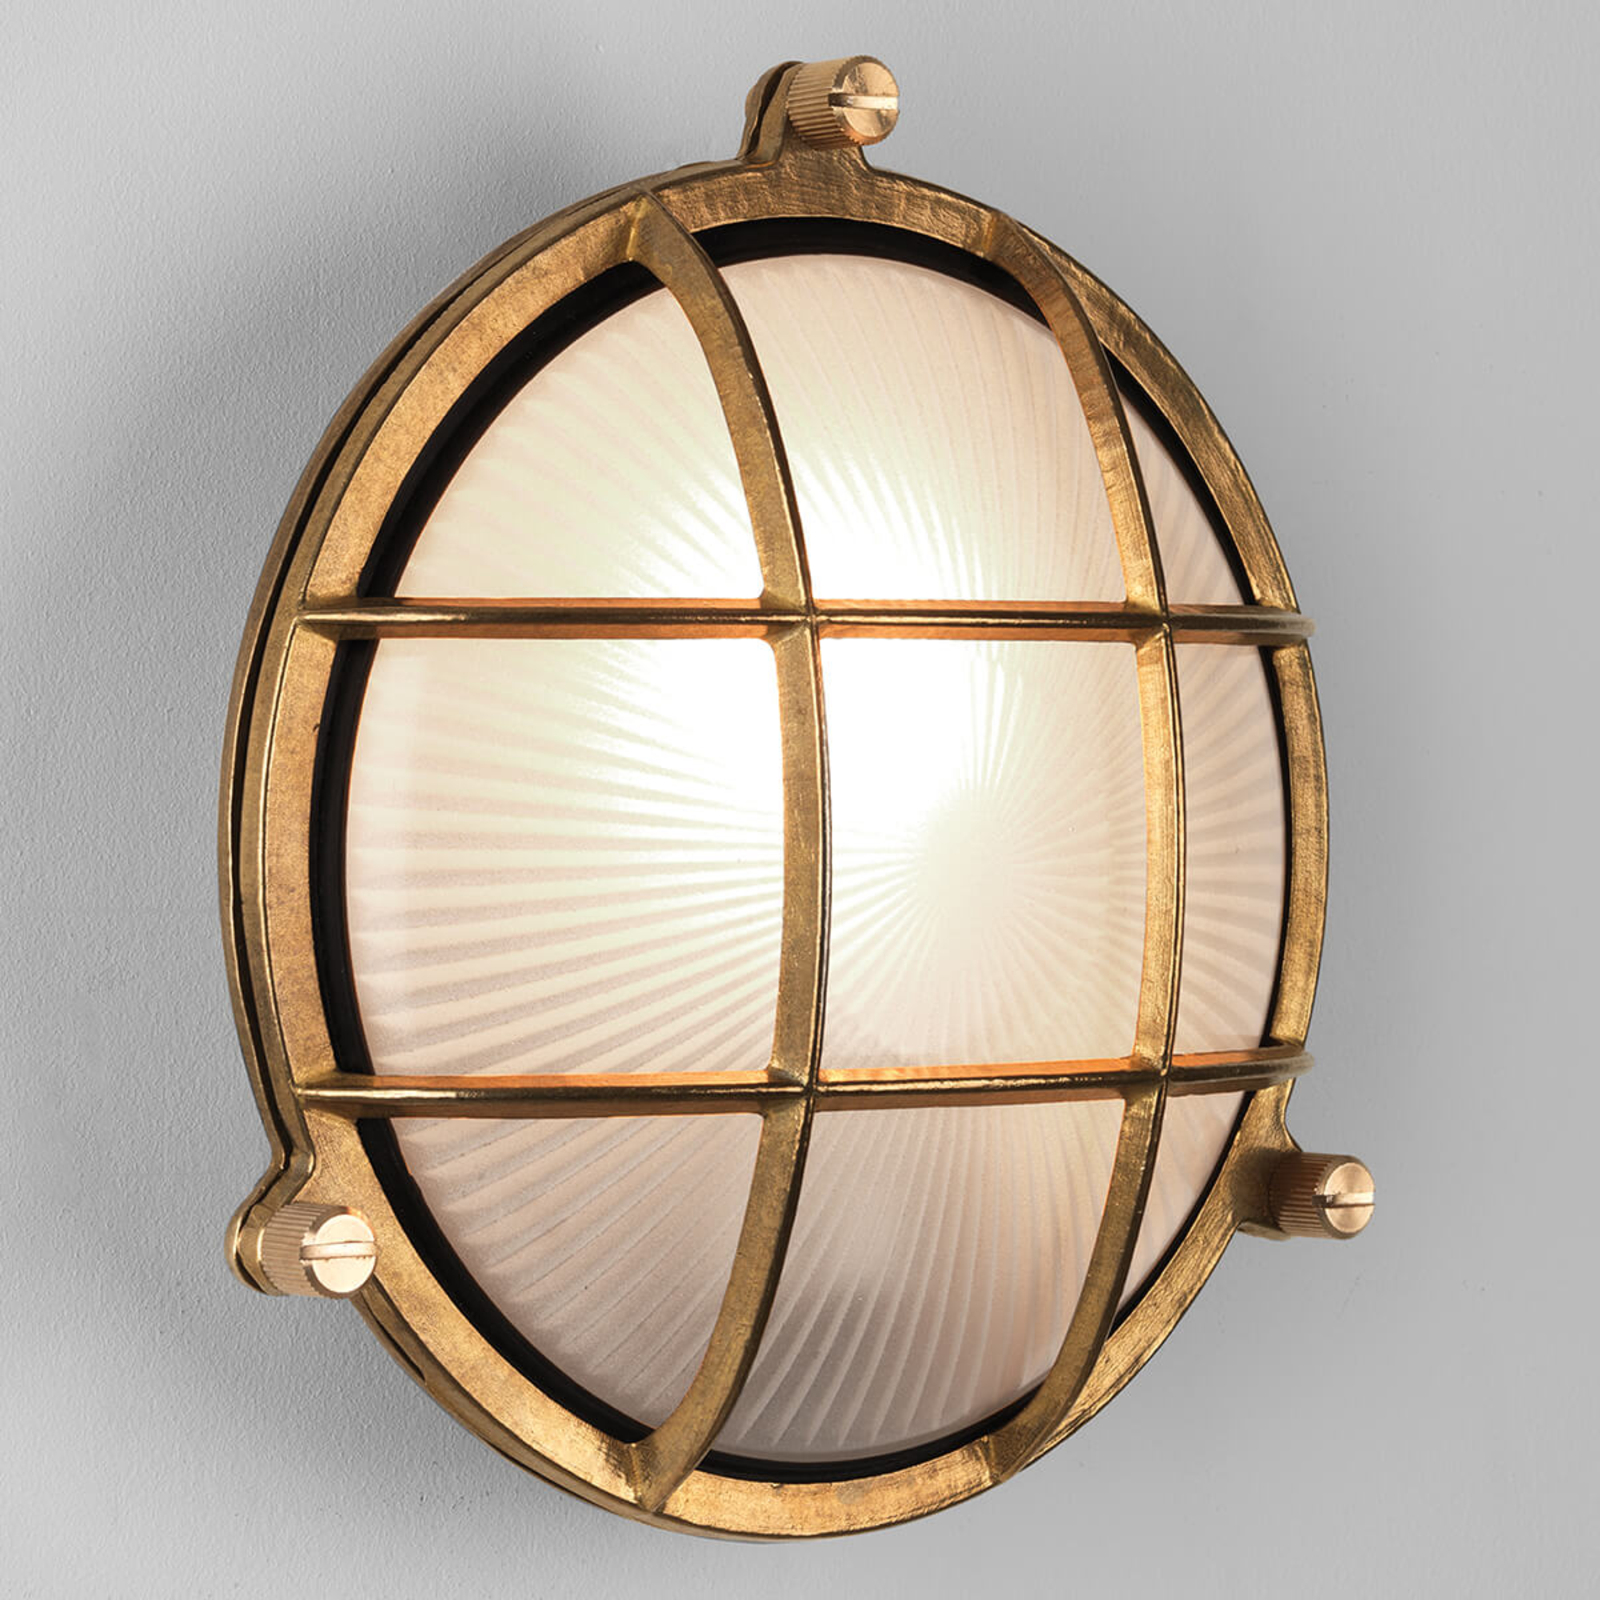 Authentic Thurso Round bulkhead light